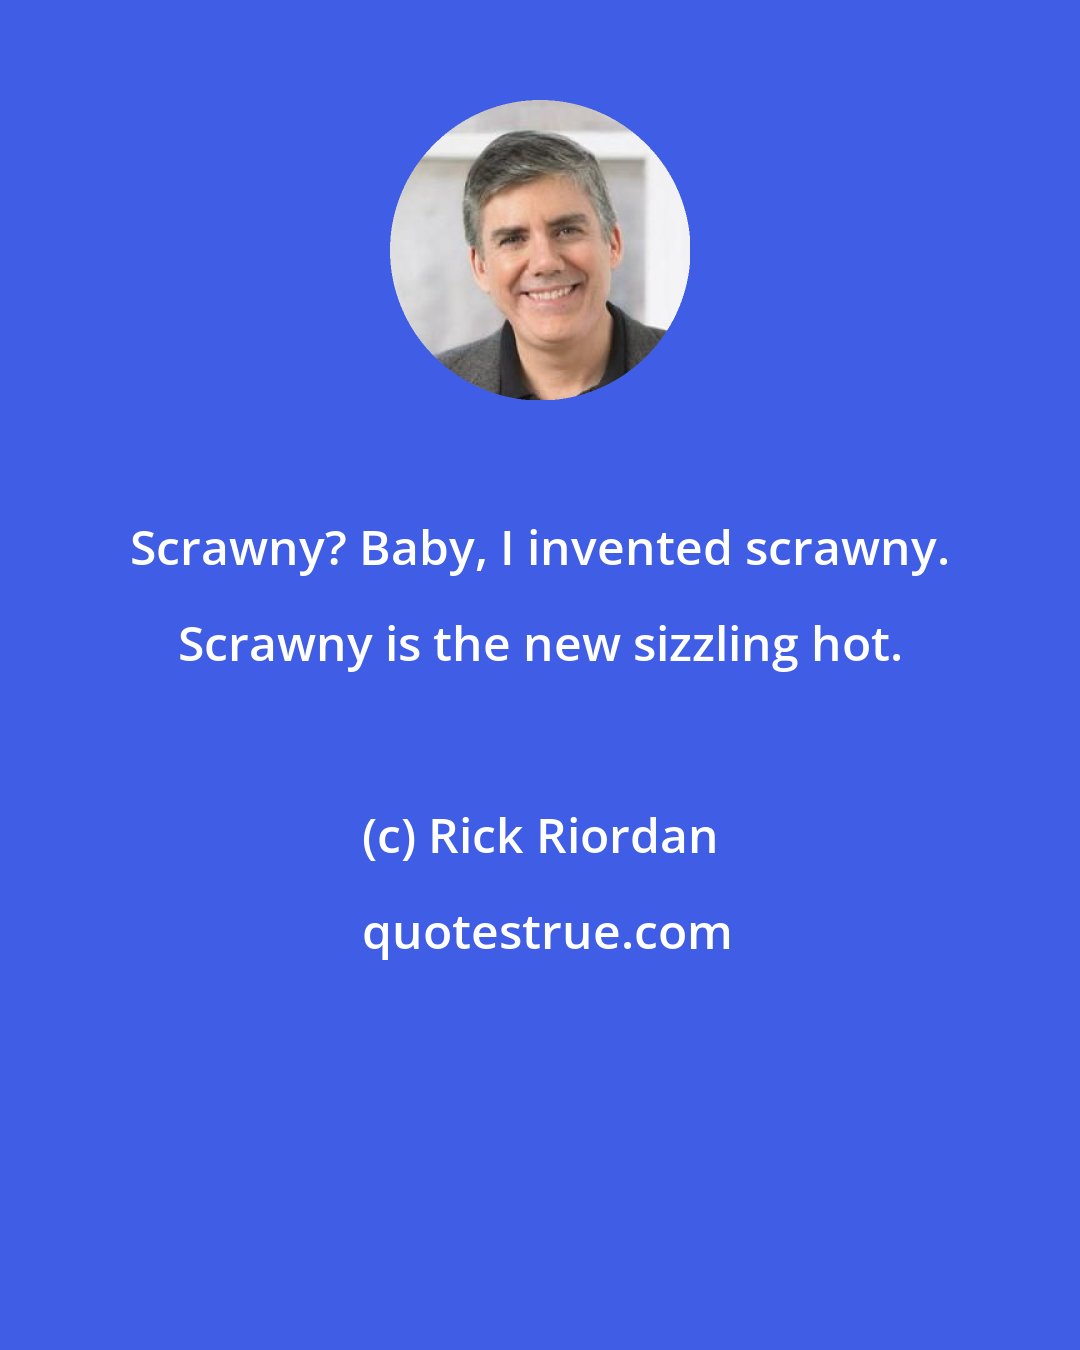 Rick Riordan: Scrawny? Baby, I invented scrawny. Scrawny is the new sizzling hot.